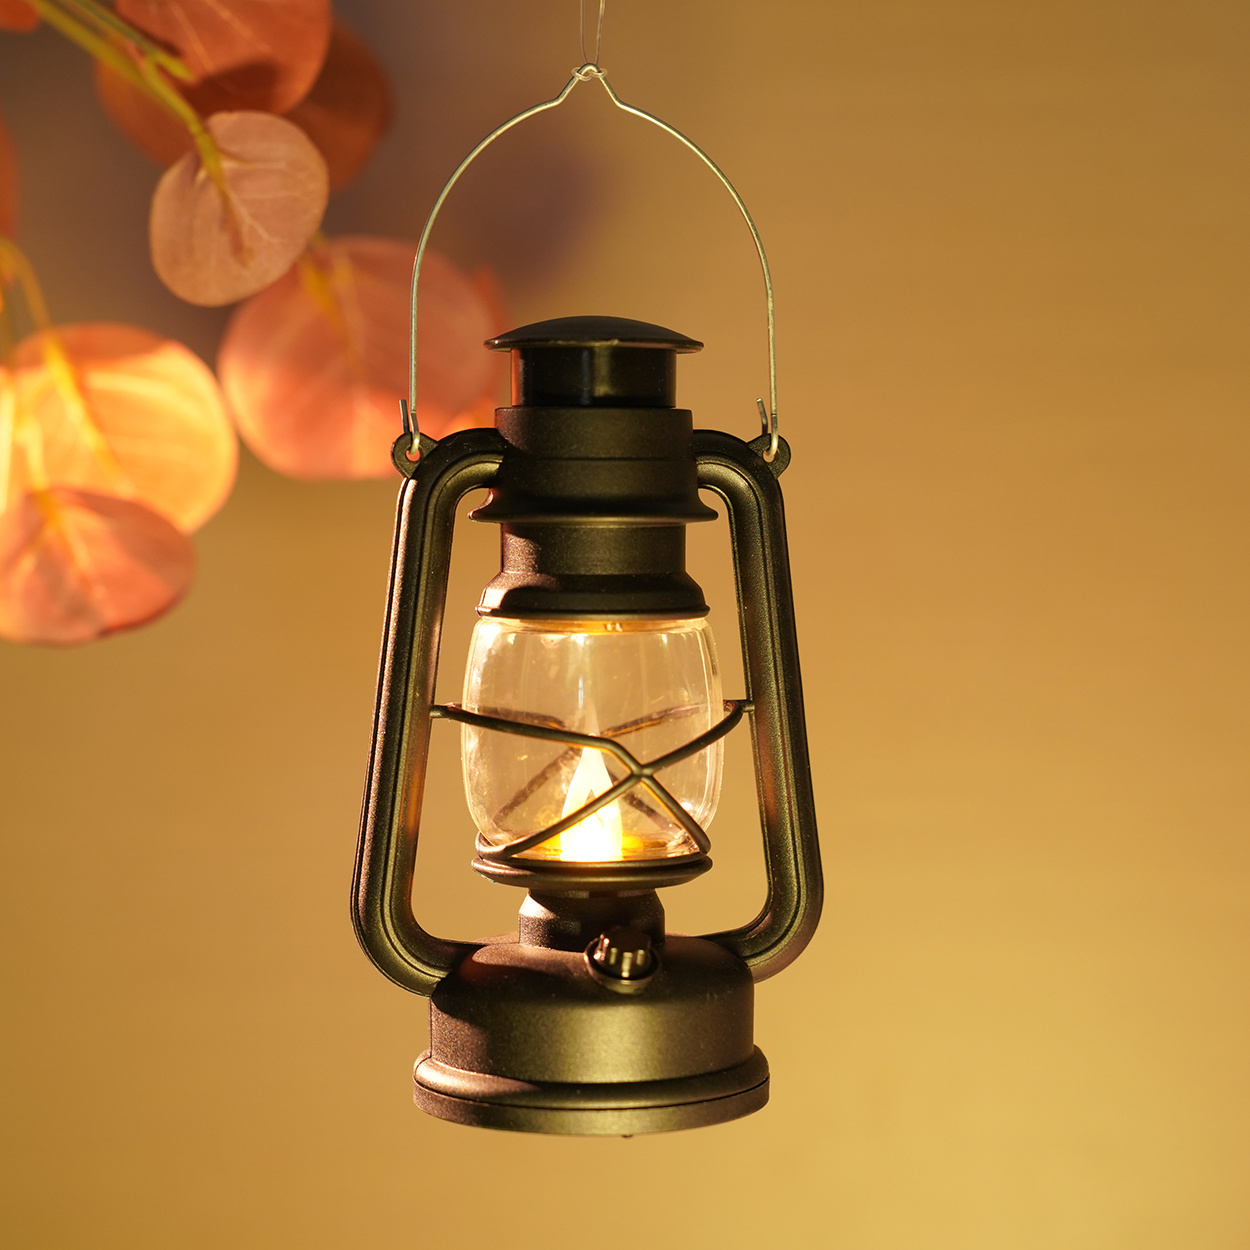 YaCool Decorative Garden Lantern - Vintage Style Hanging Lanterns Outdoor  Lighting Garden Light - Battery-operated 5 Hour Timer- 12' (009) 